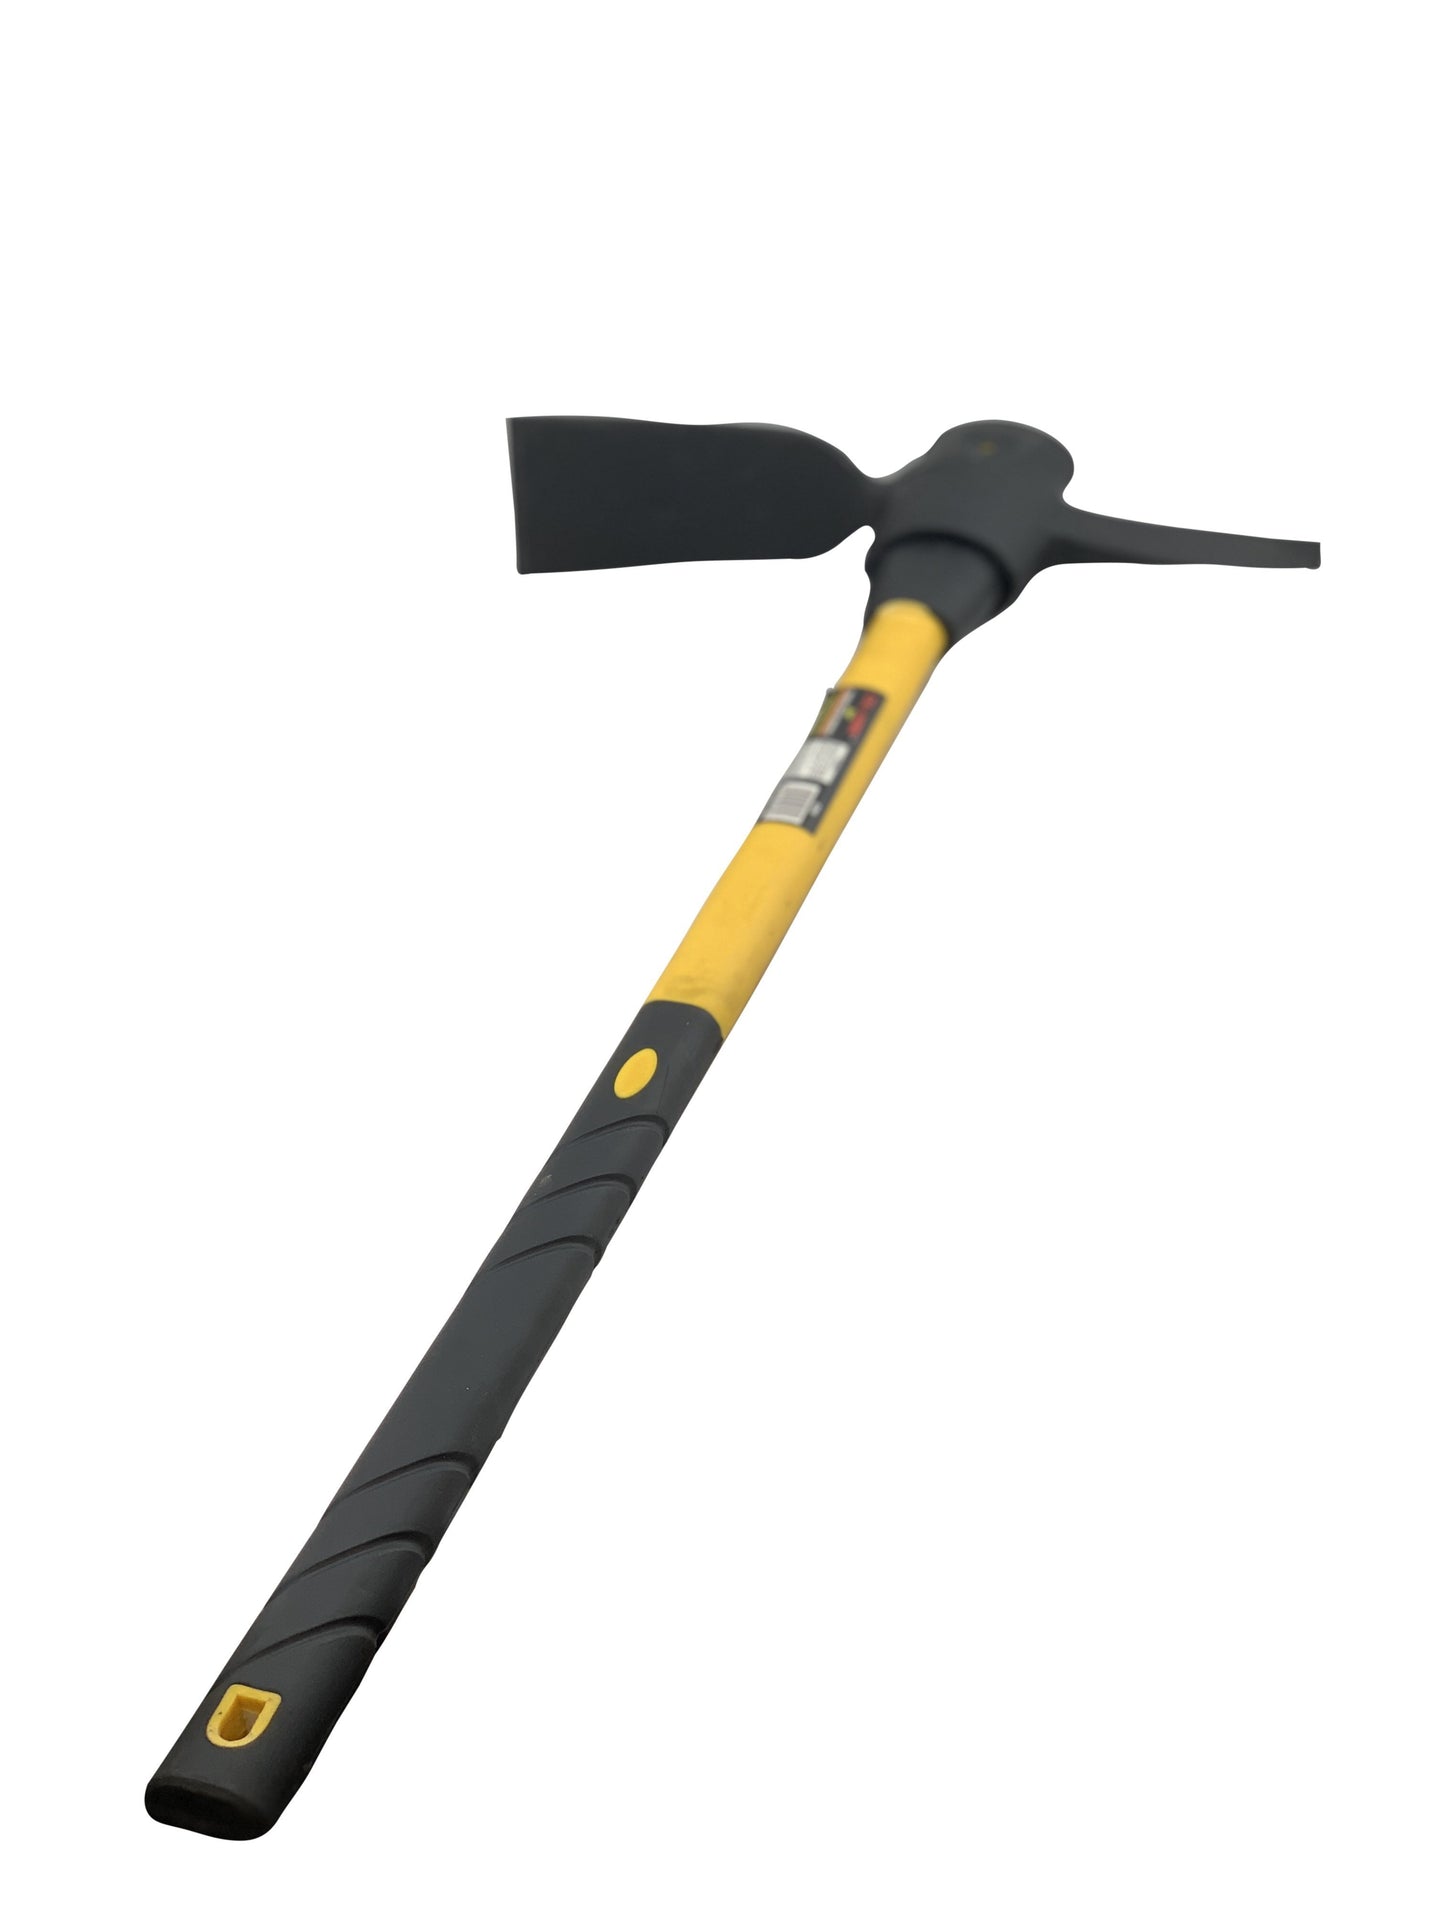 Mottock Cutter 5 Pound With Fiberglass Handle-gardening tools-Tool Mart Inc.